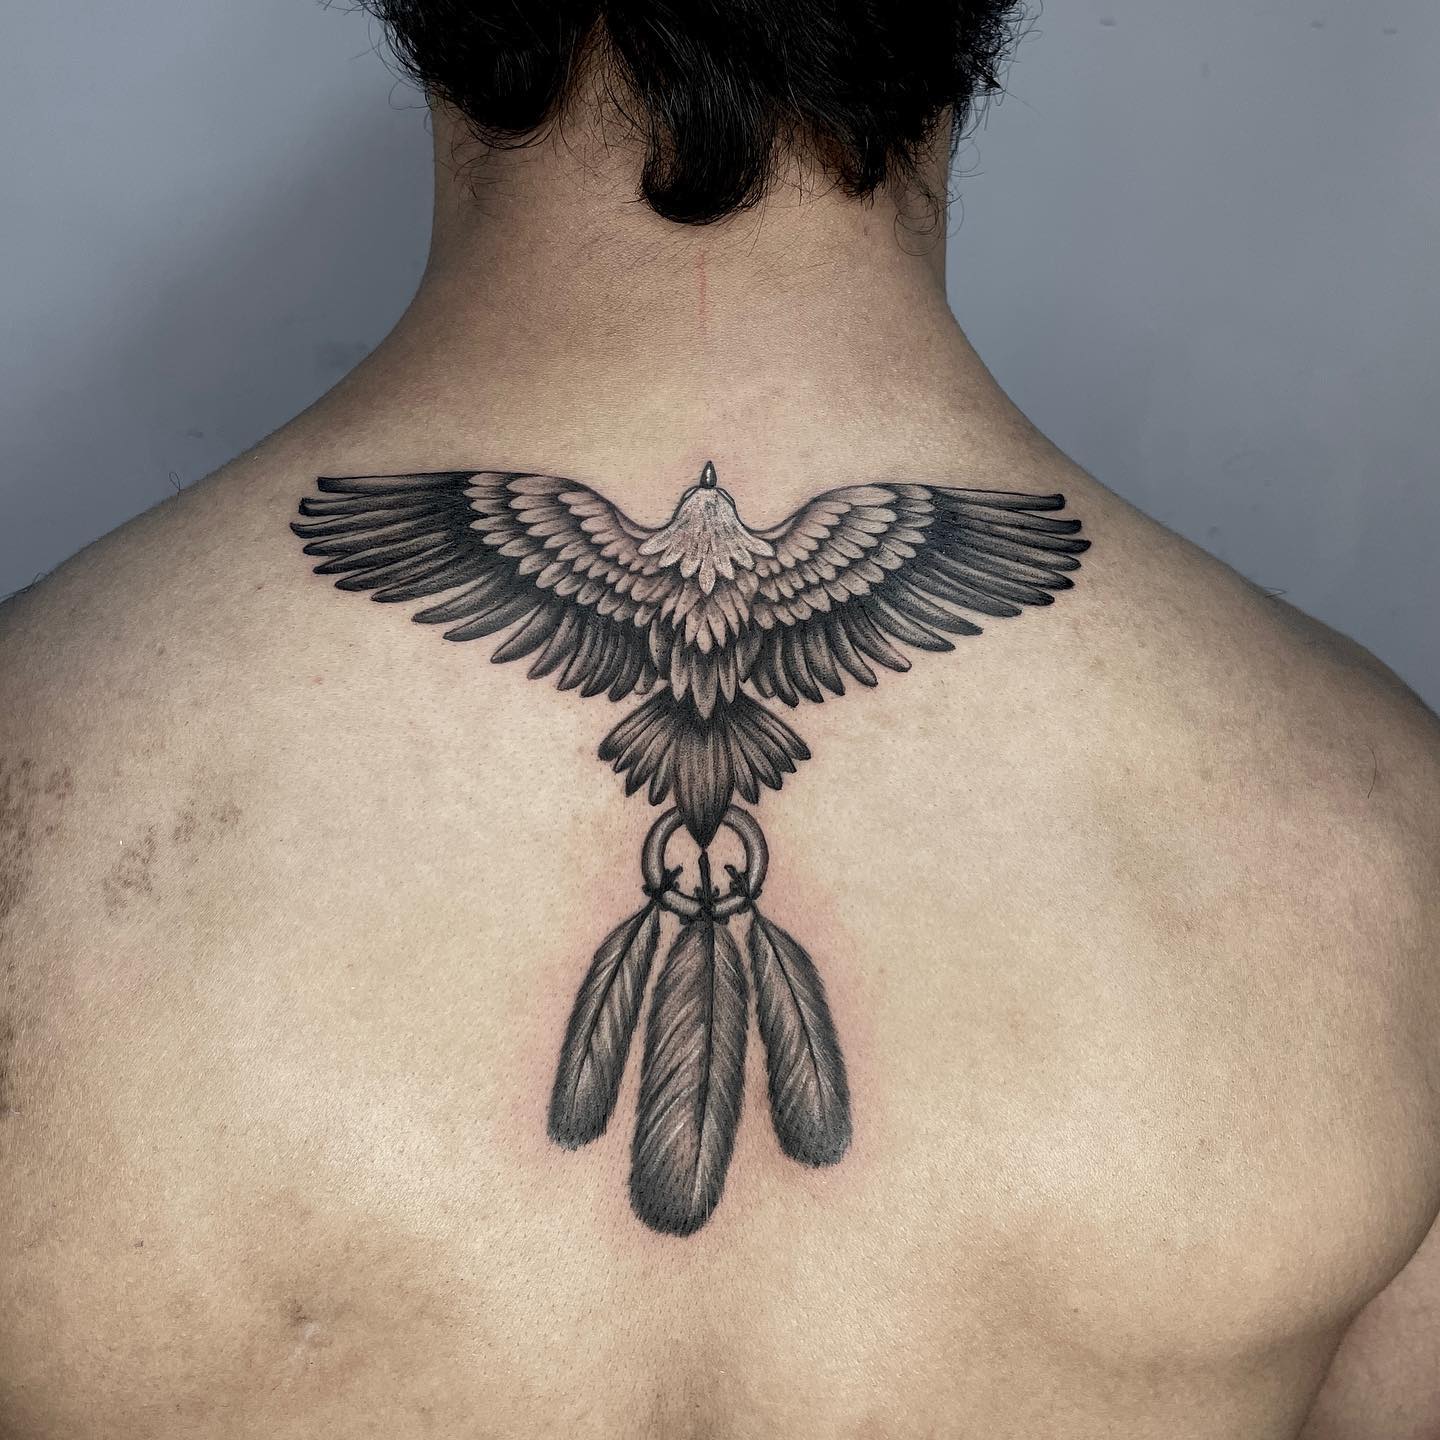 Tatuaje de Pájaro Pequeño en la Espalda.